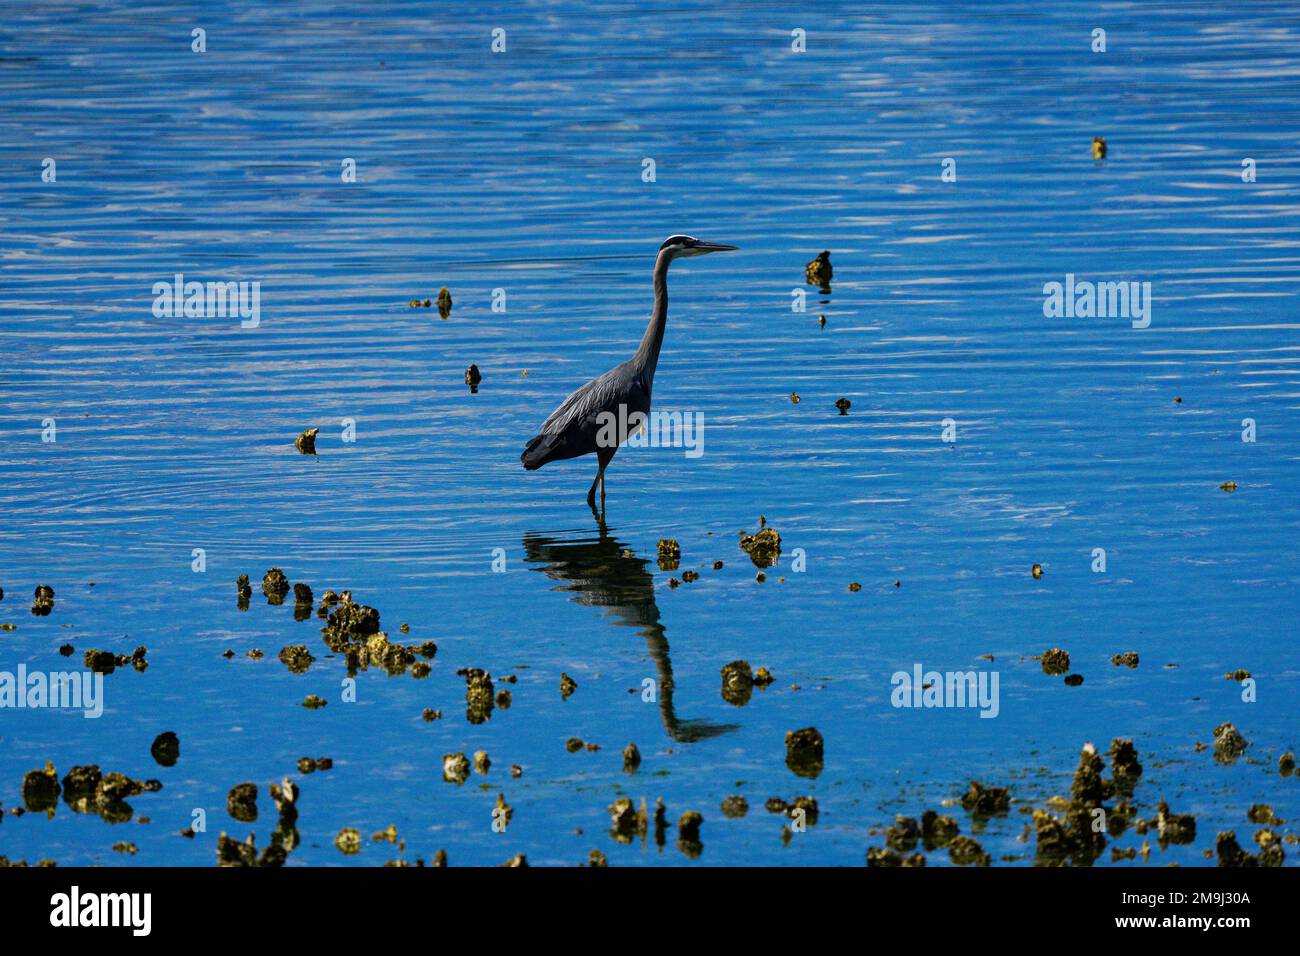 Crane in shallow water, Hood Canal, Washington, USA Stock Photo